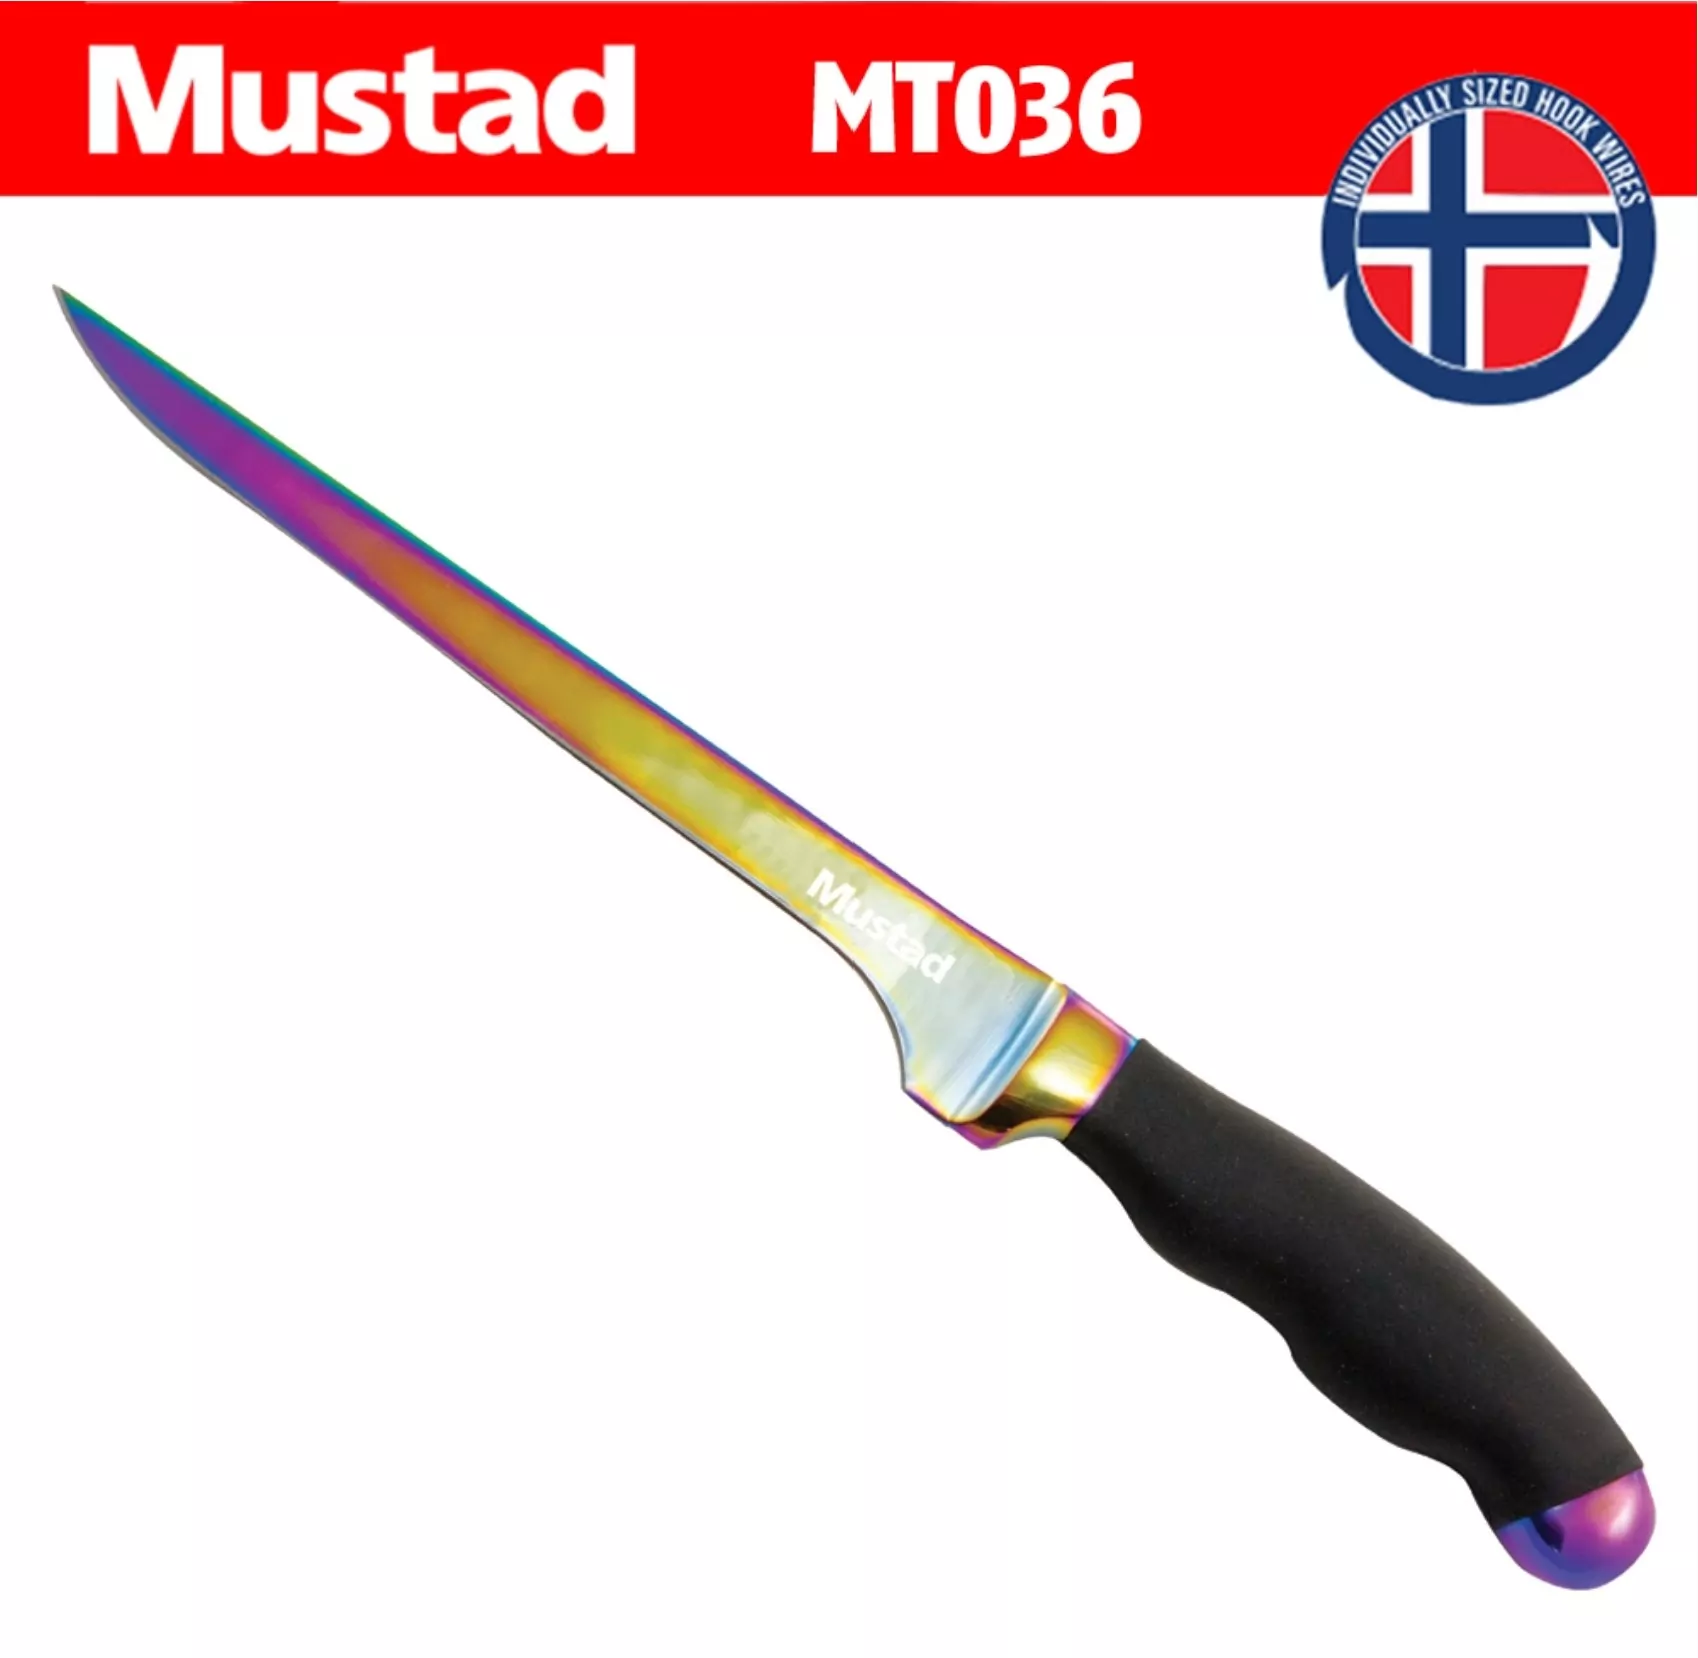 MUSTAD MT036 7' Fillet Knife With Titanium Coating: Tools Online at Pelagic  Tribe Shop